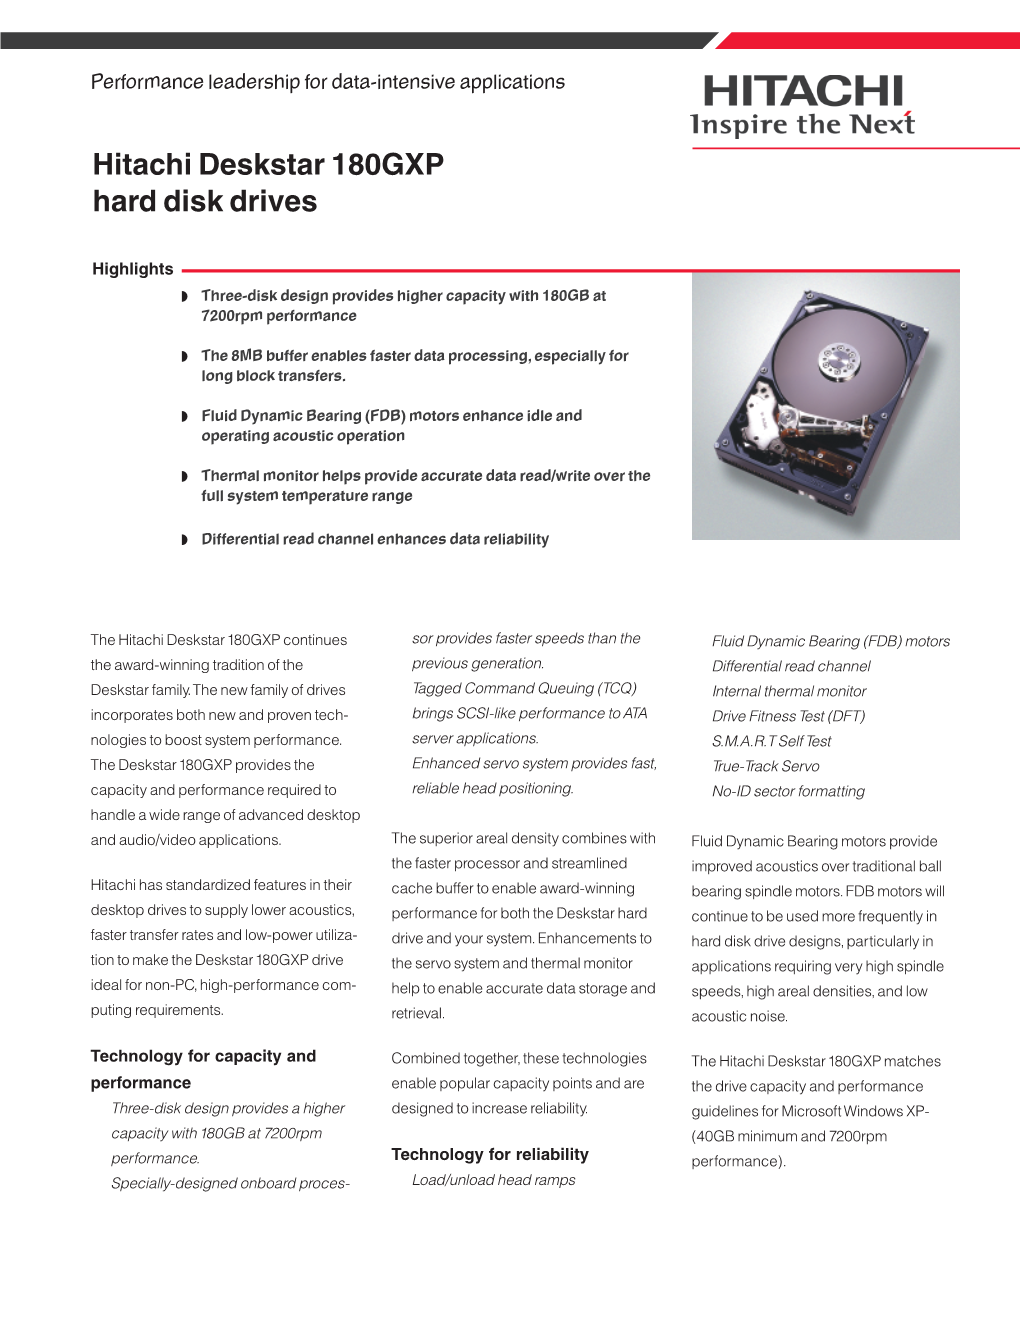 Hitachi Deskstar 180GXP Hard Disk Drives